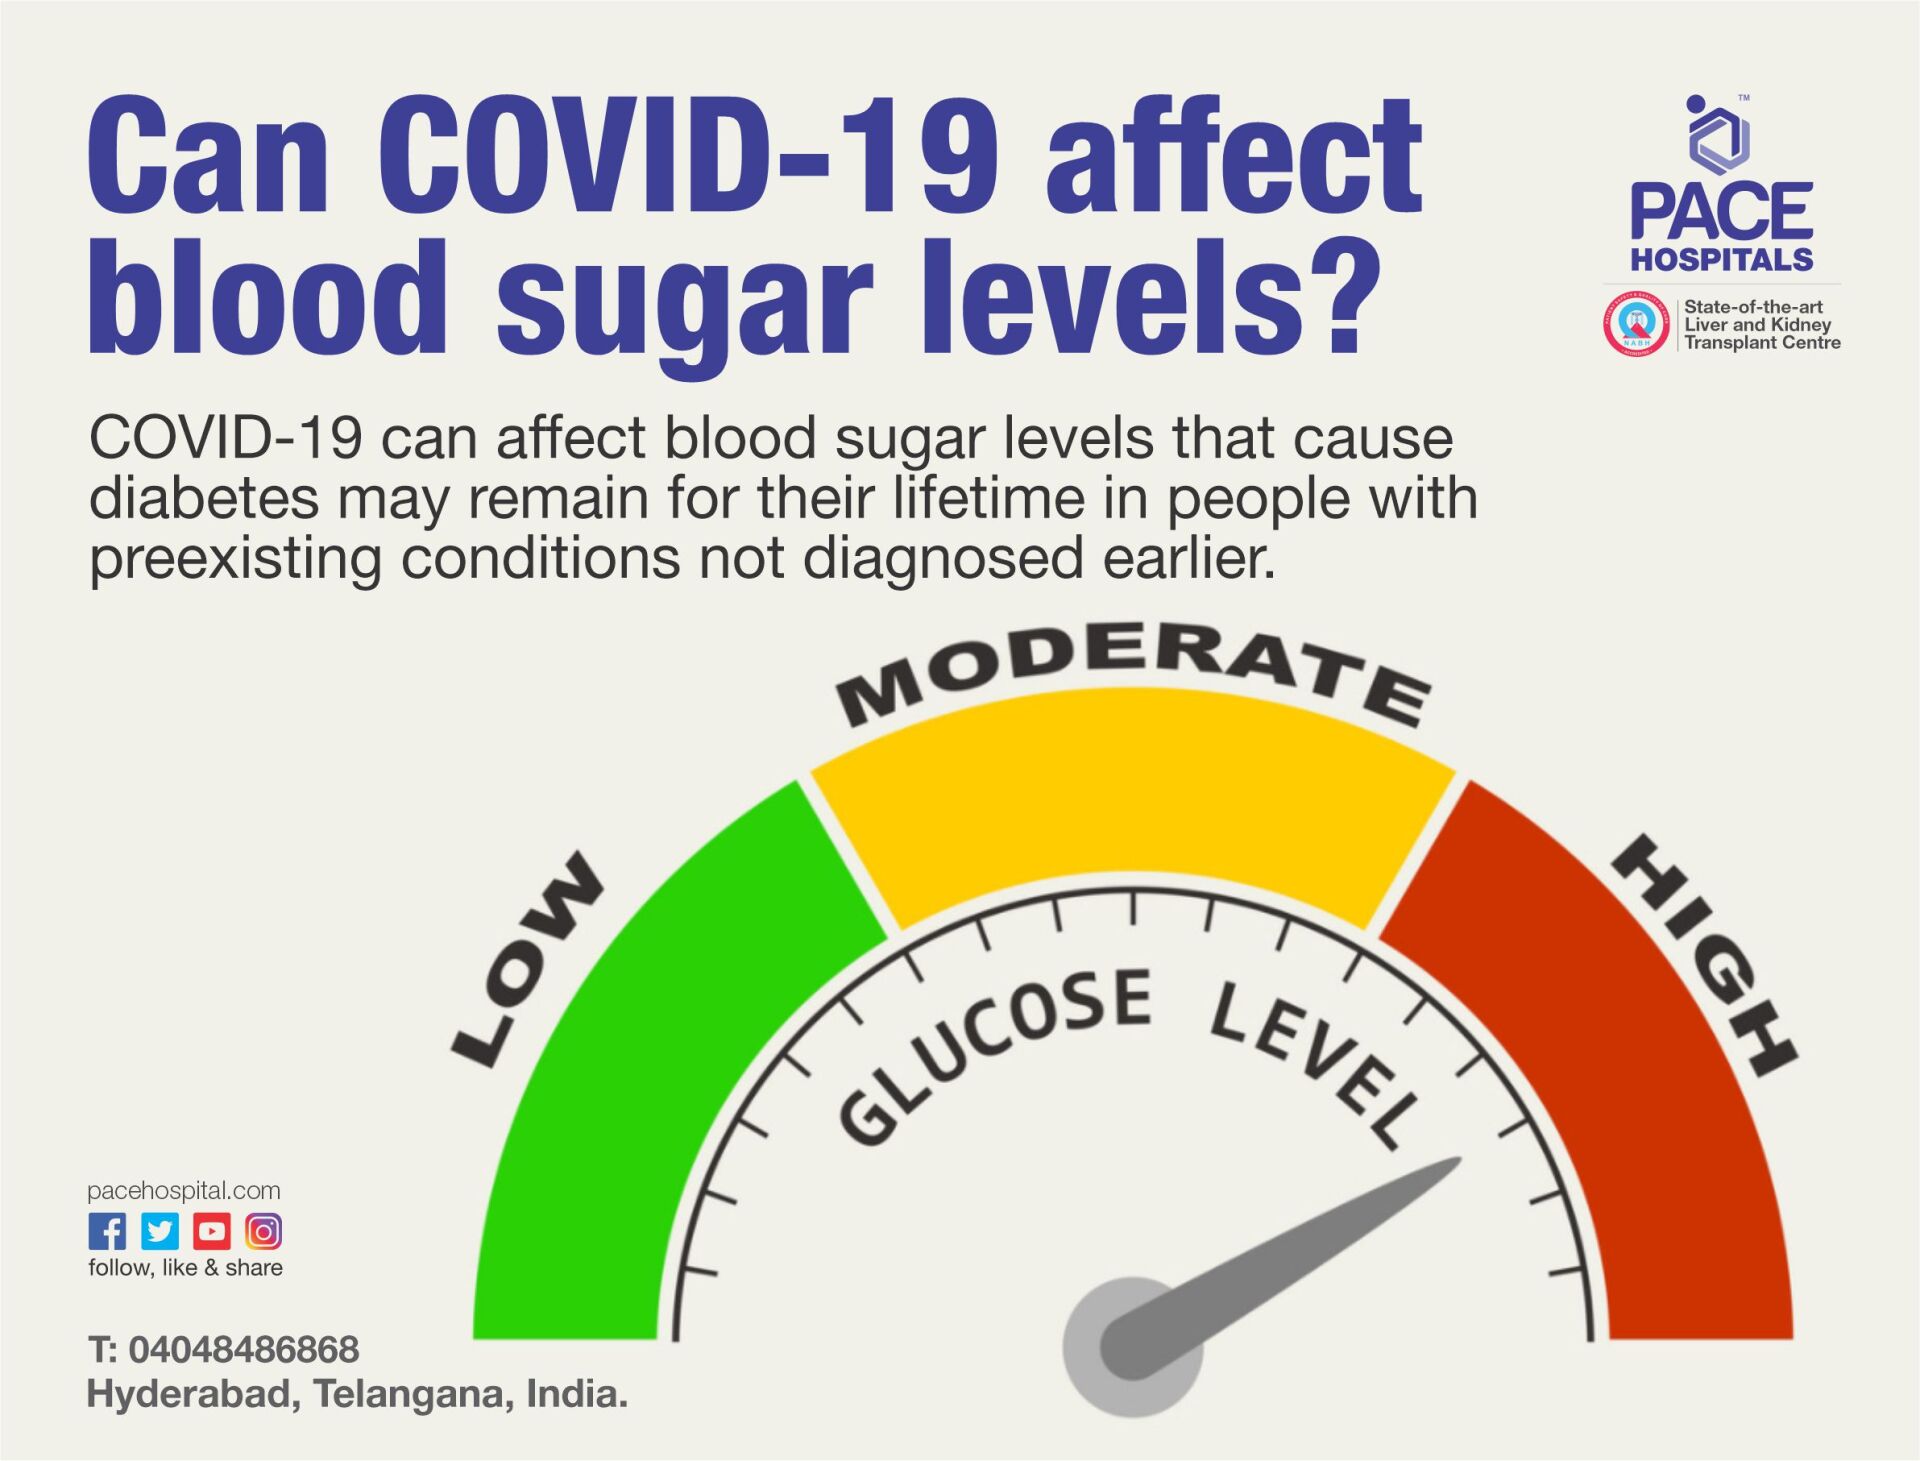 Coronavirus: can COVID-19 increase blood sugar levels